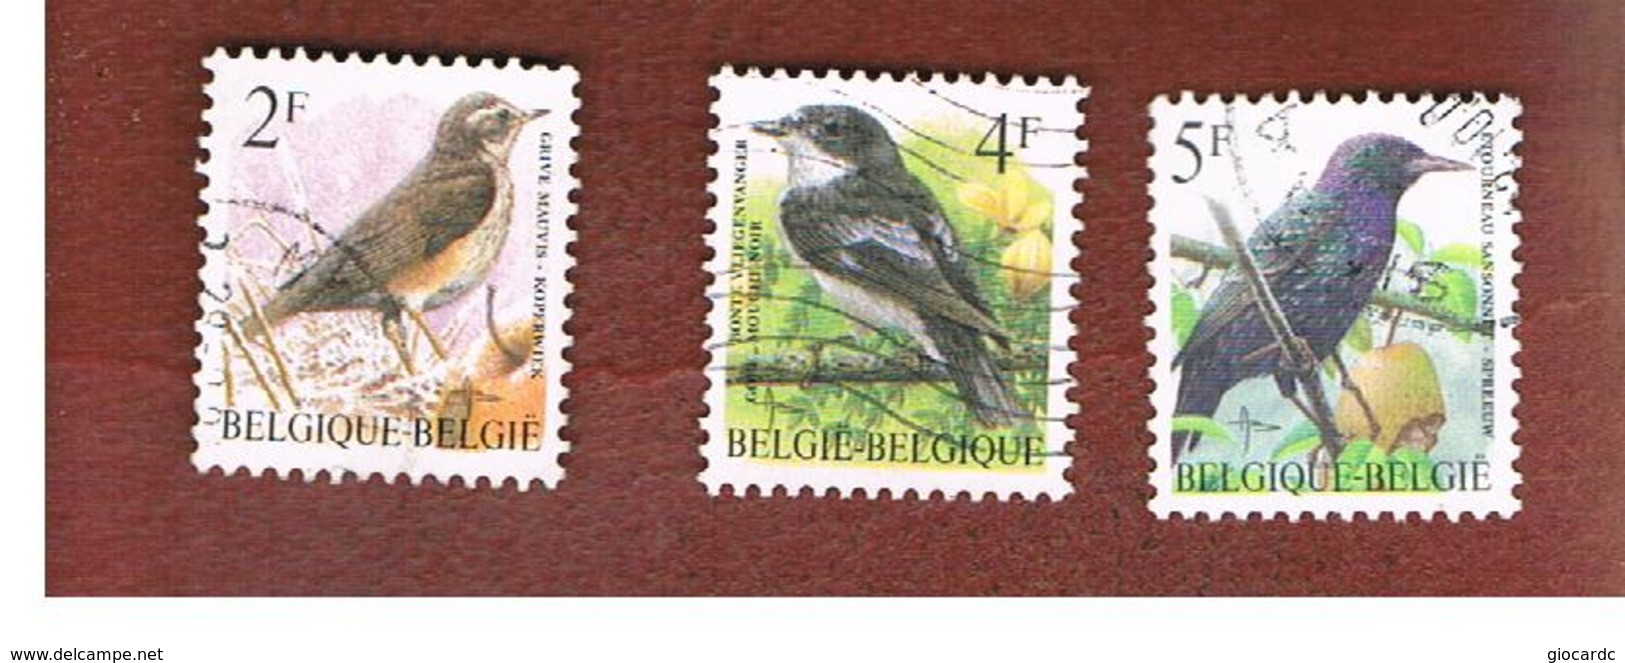 BELGIO (BELGIUM)   - SG 3304.3307  - 1996 BIRDS    - USED - Used Stamps